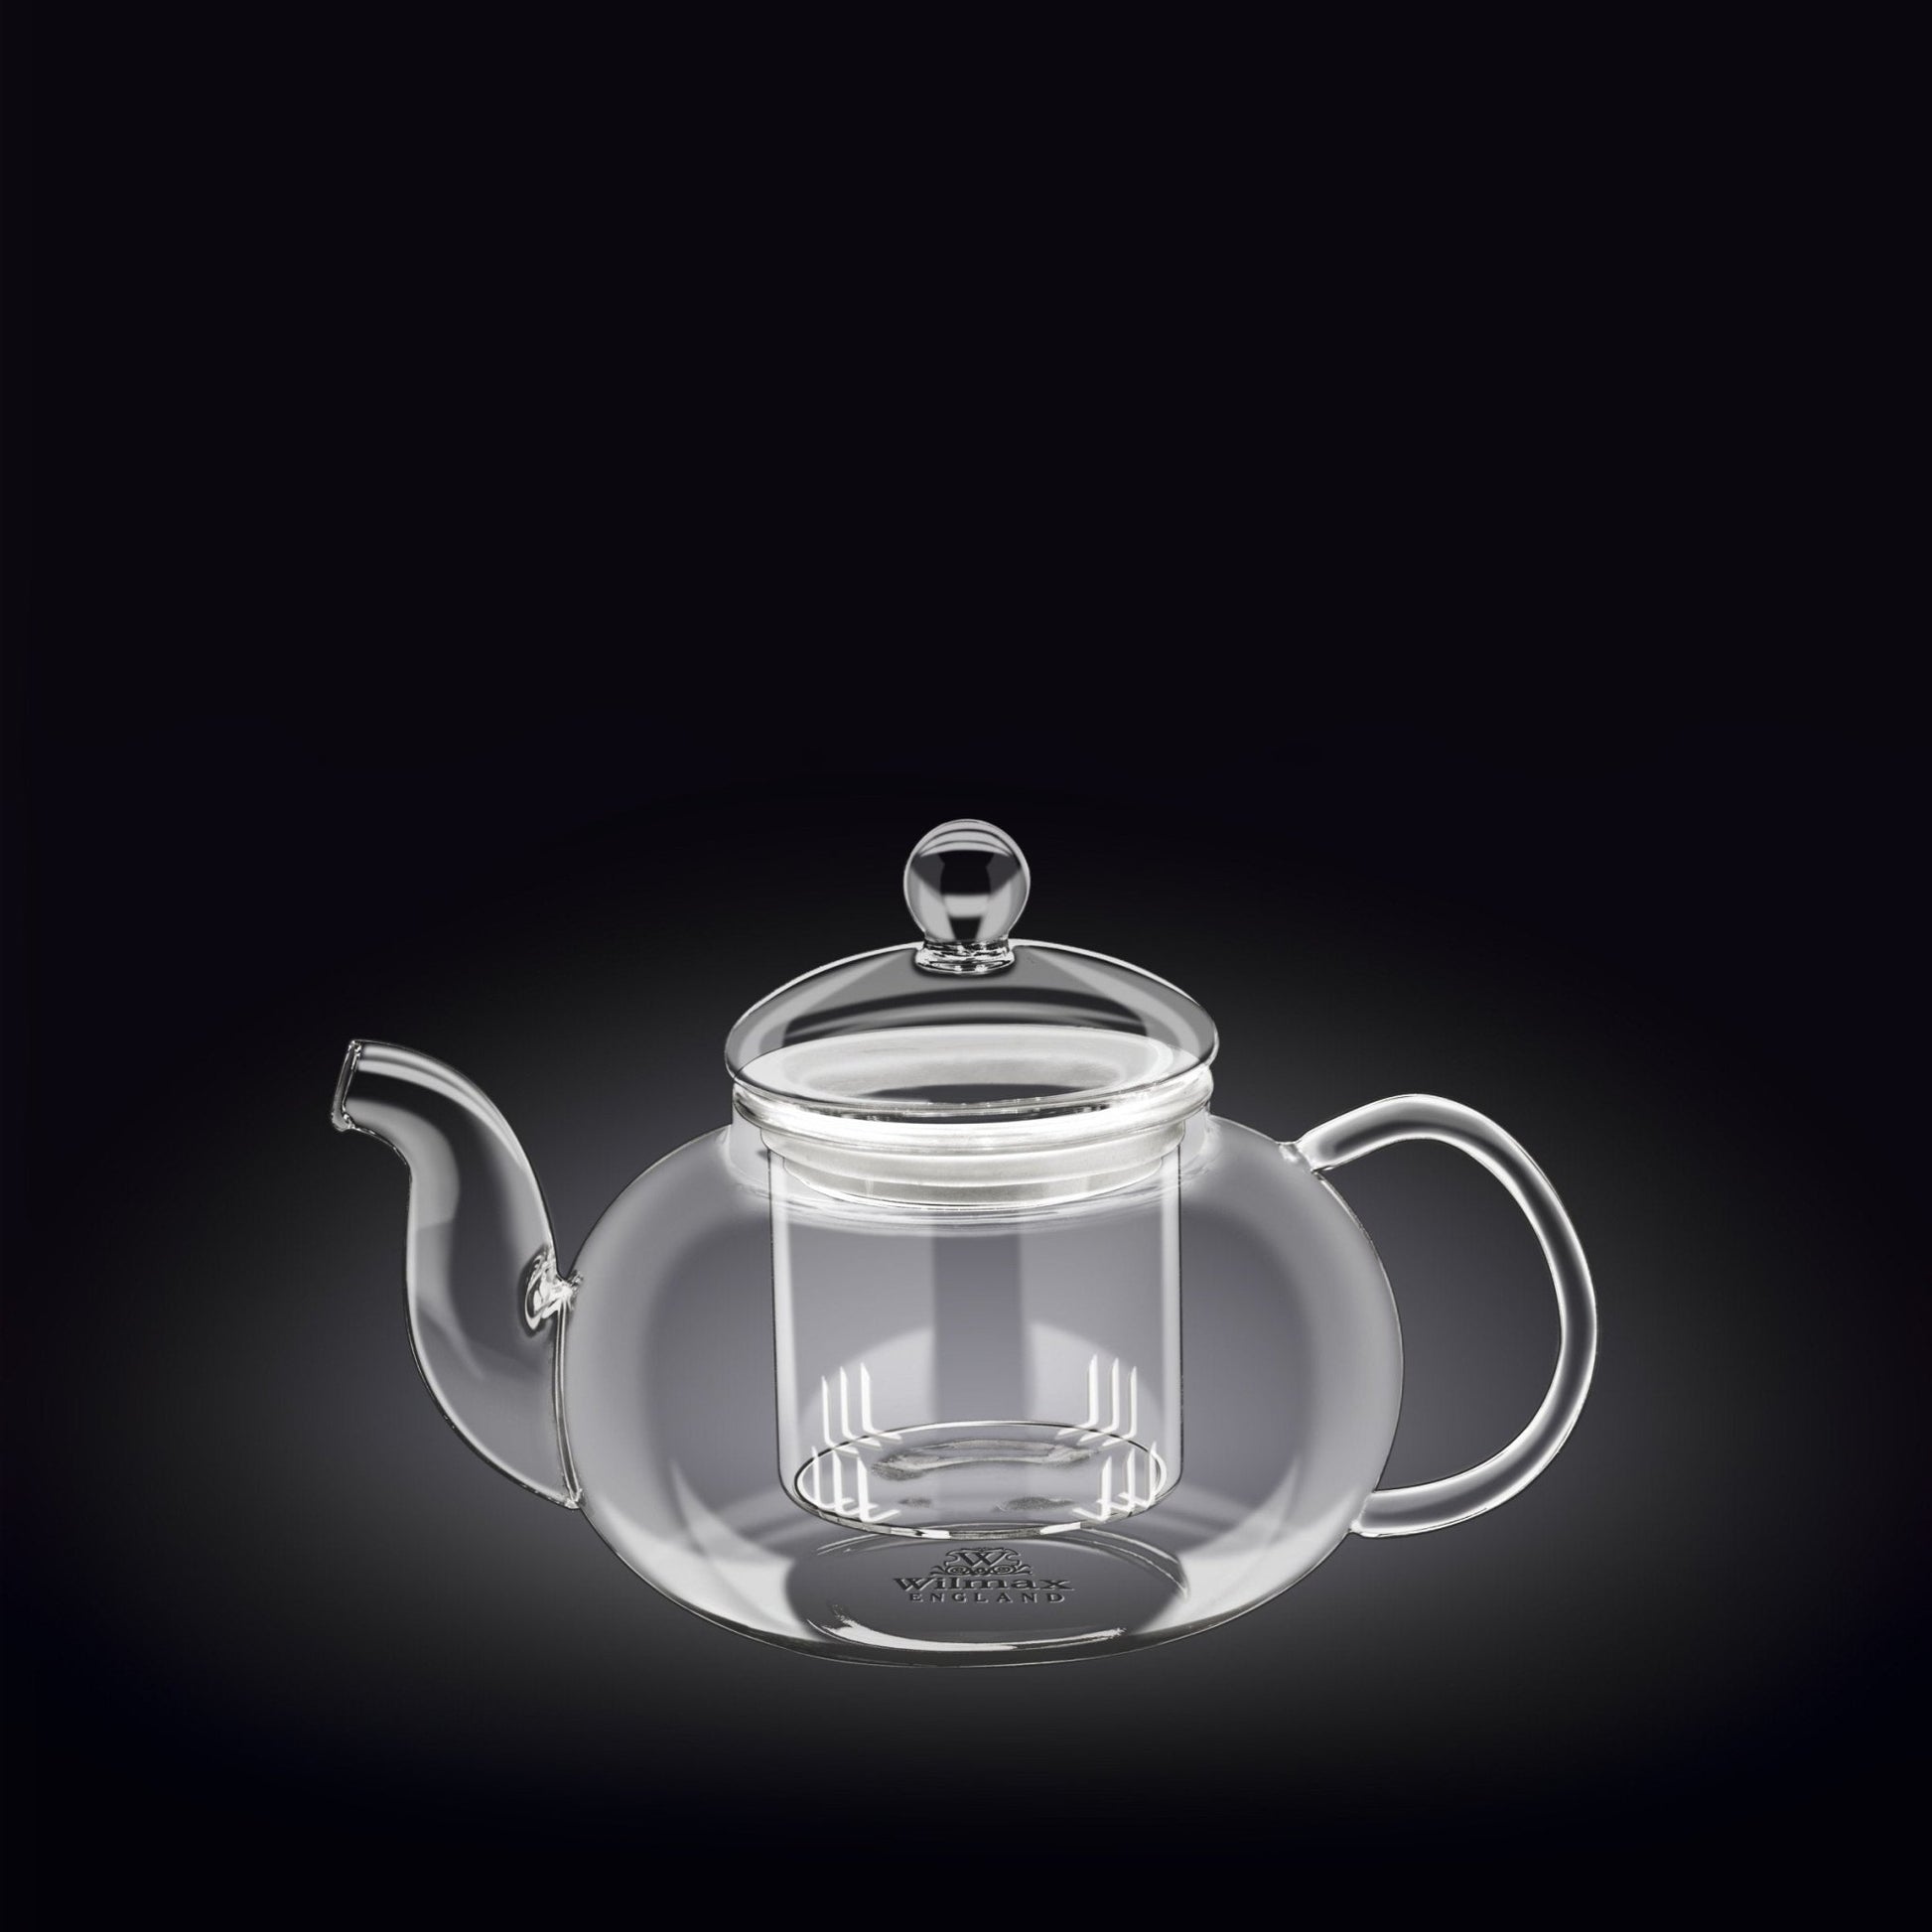 Wilmax Tea Pot 32 fl oz | 950 ml